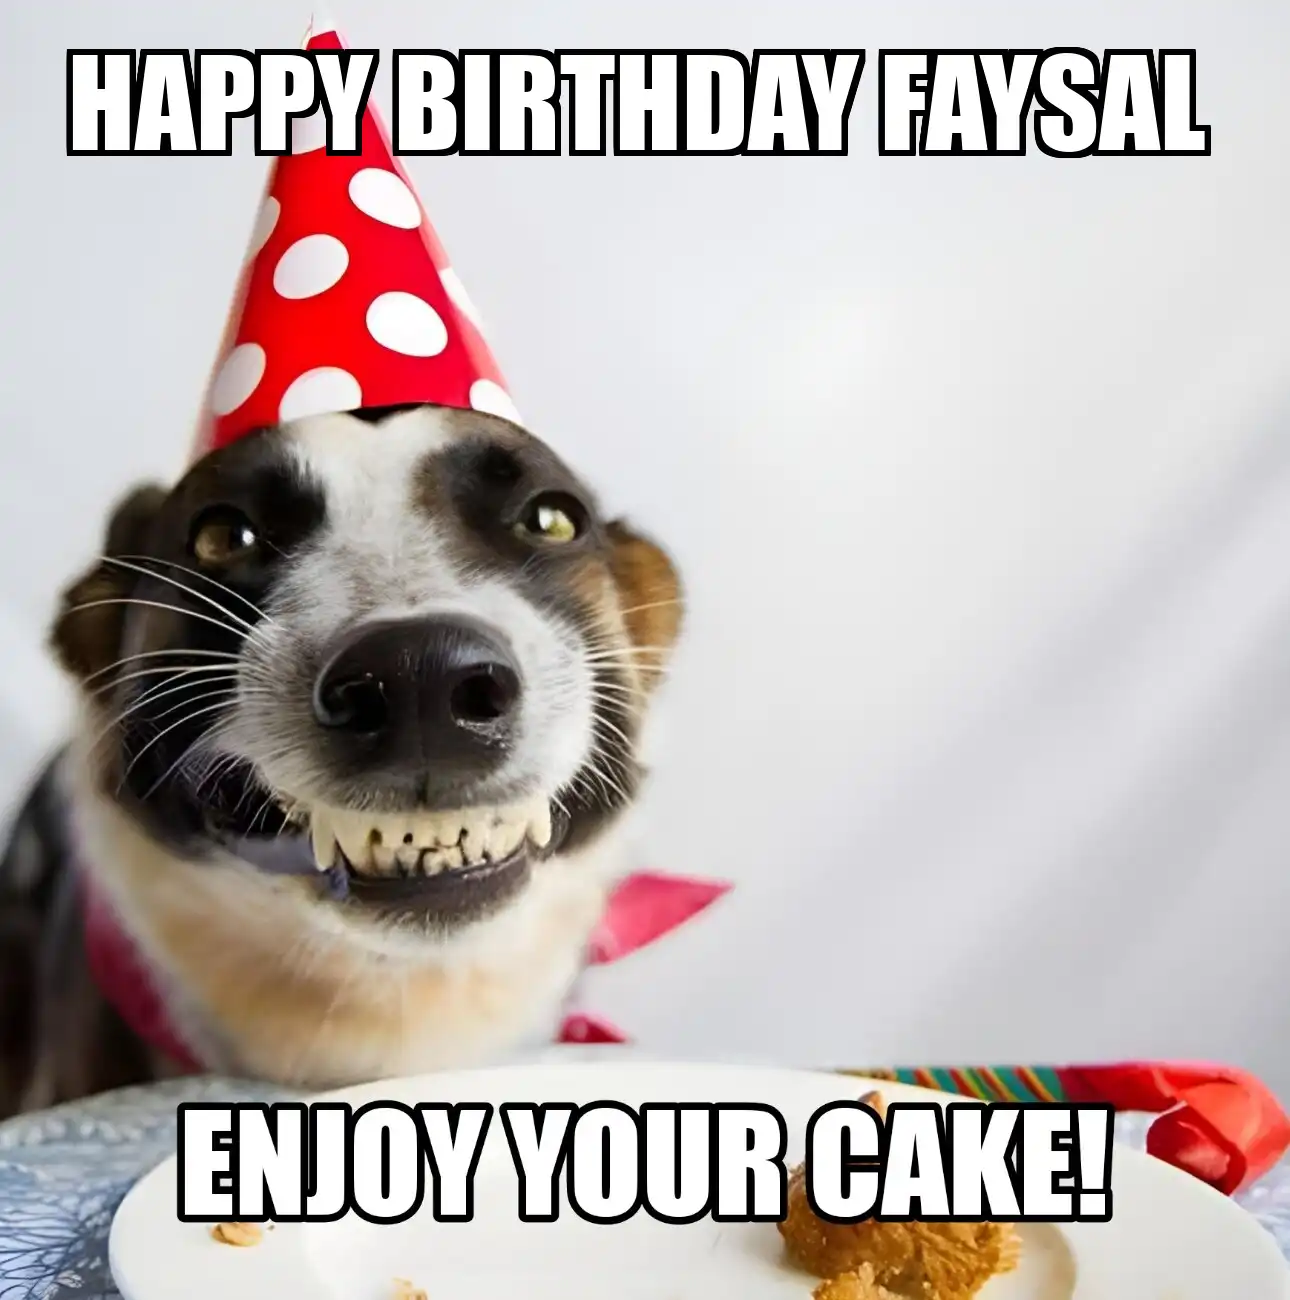 Happy Birthday Faysal Enjoy Your Cake Dog Meme